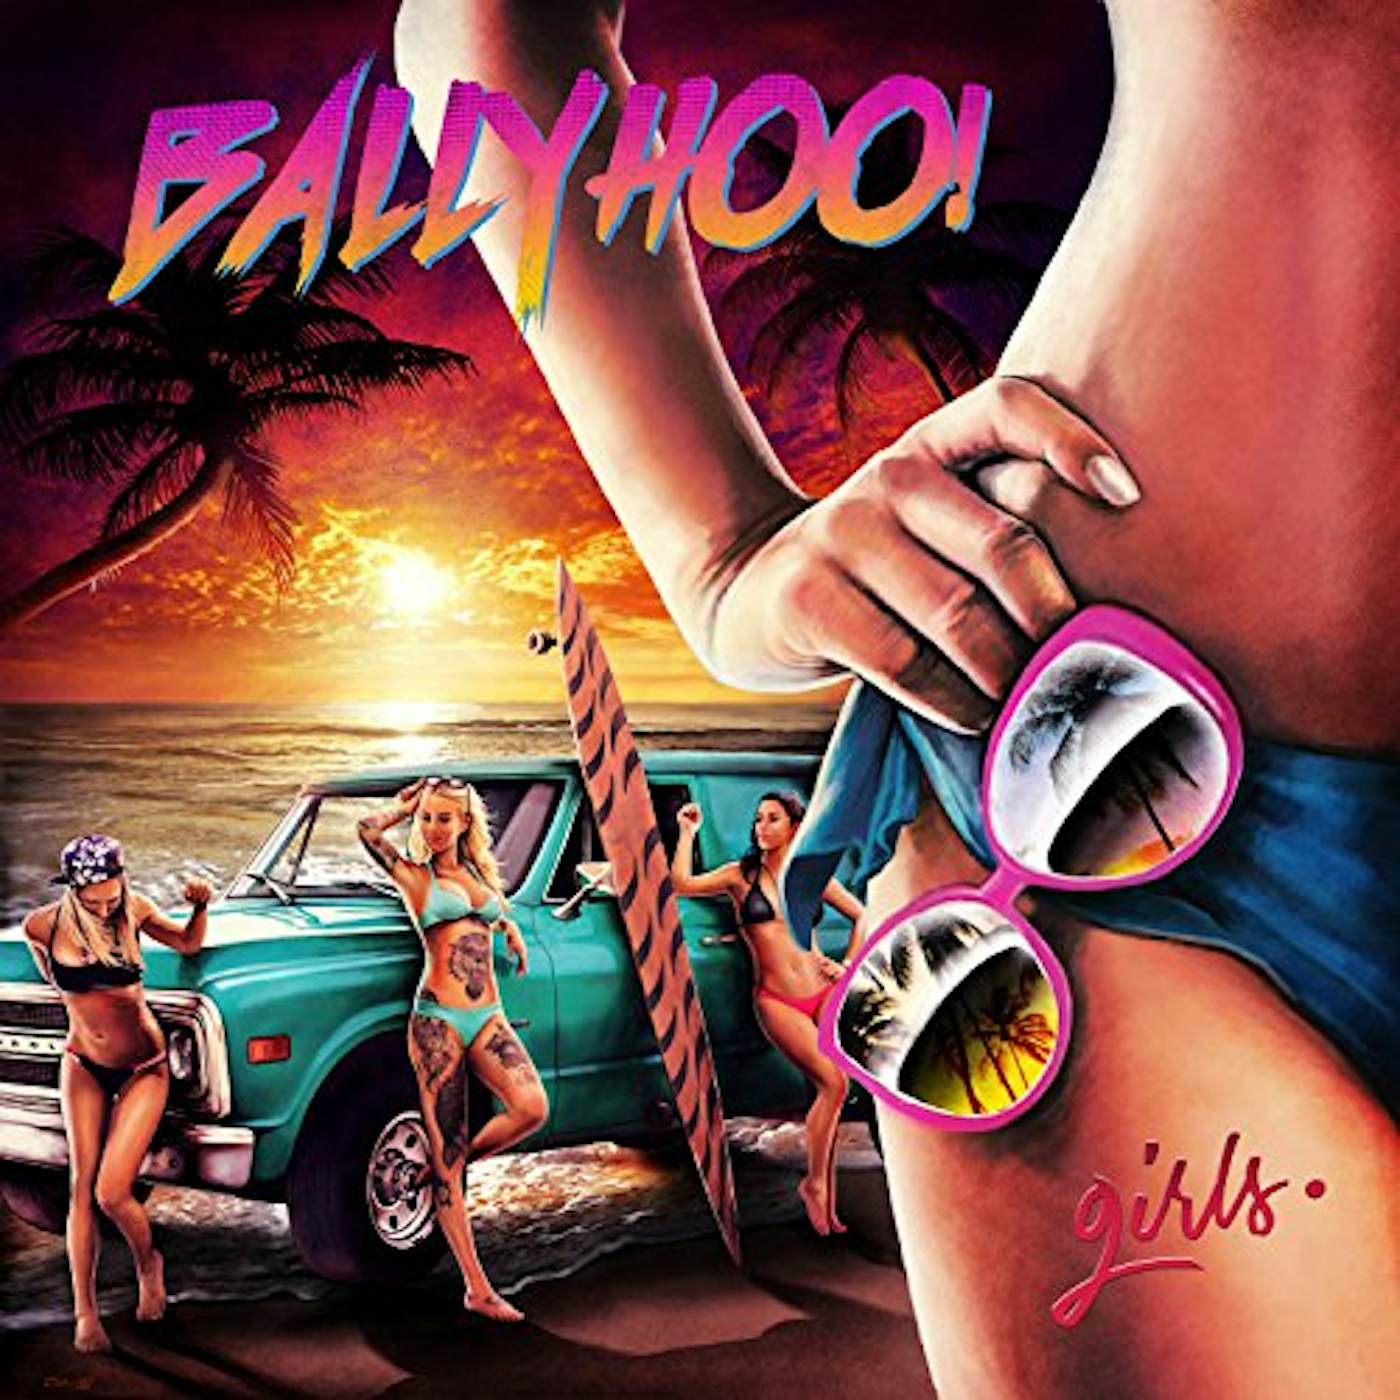 Ballyhoo! GIRLS Vinyl Record